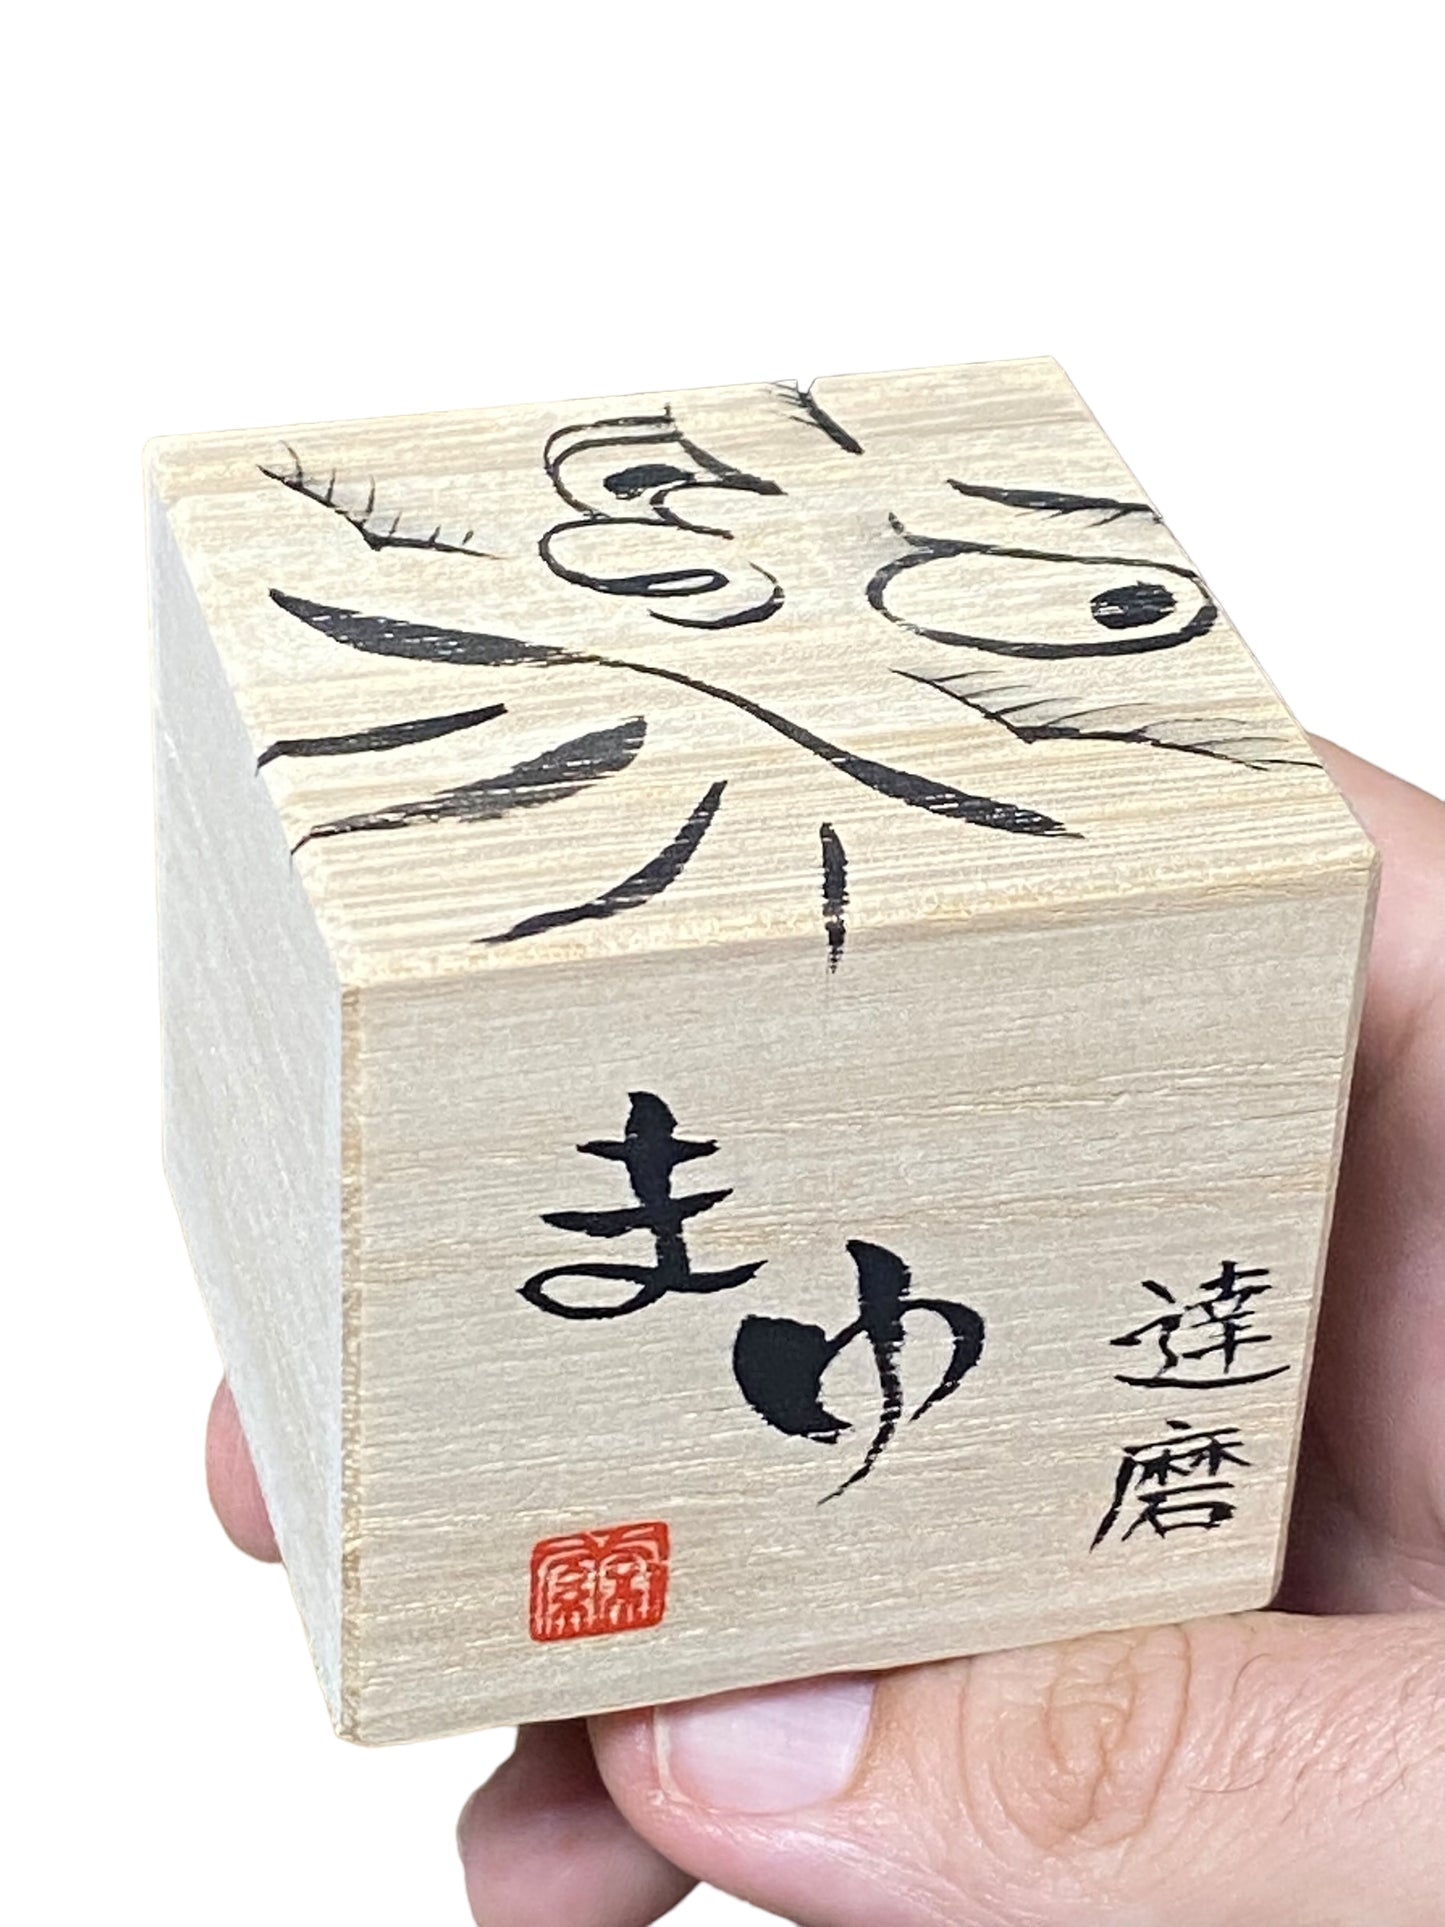 Oshima Mayu - Painted Daruma Mame Bonsai Pot with Cloth and Box